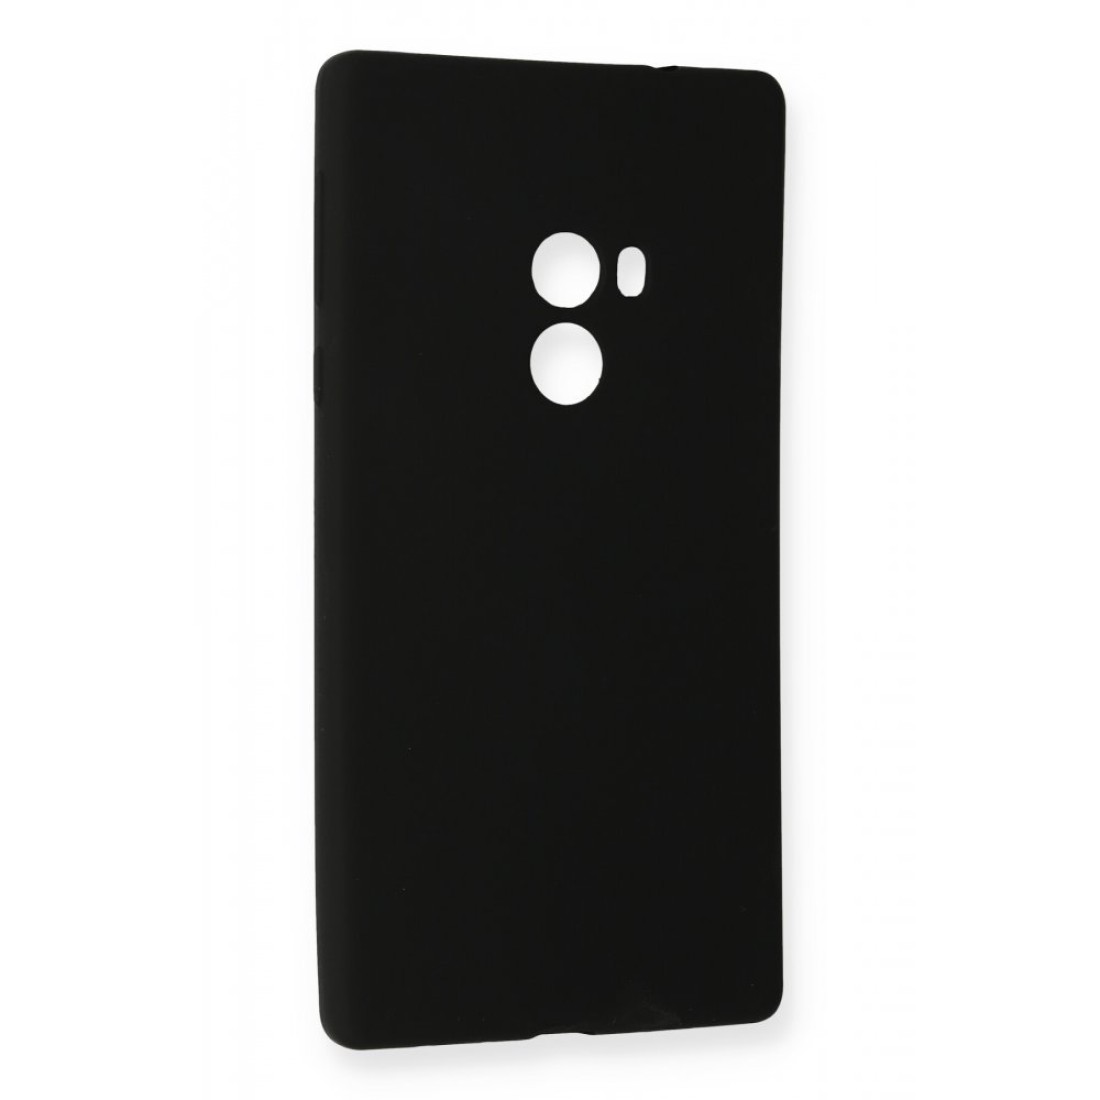 Xiaomi Mi Mix Kılıf Premium Rubber Silikon - Siyah